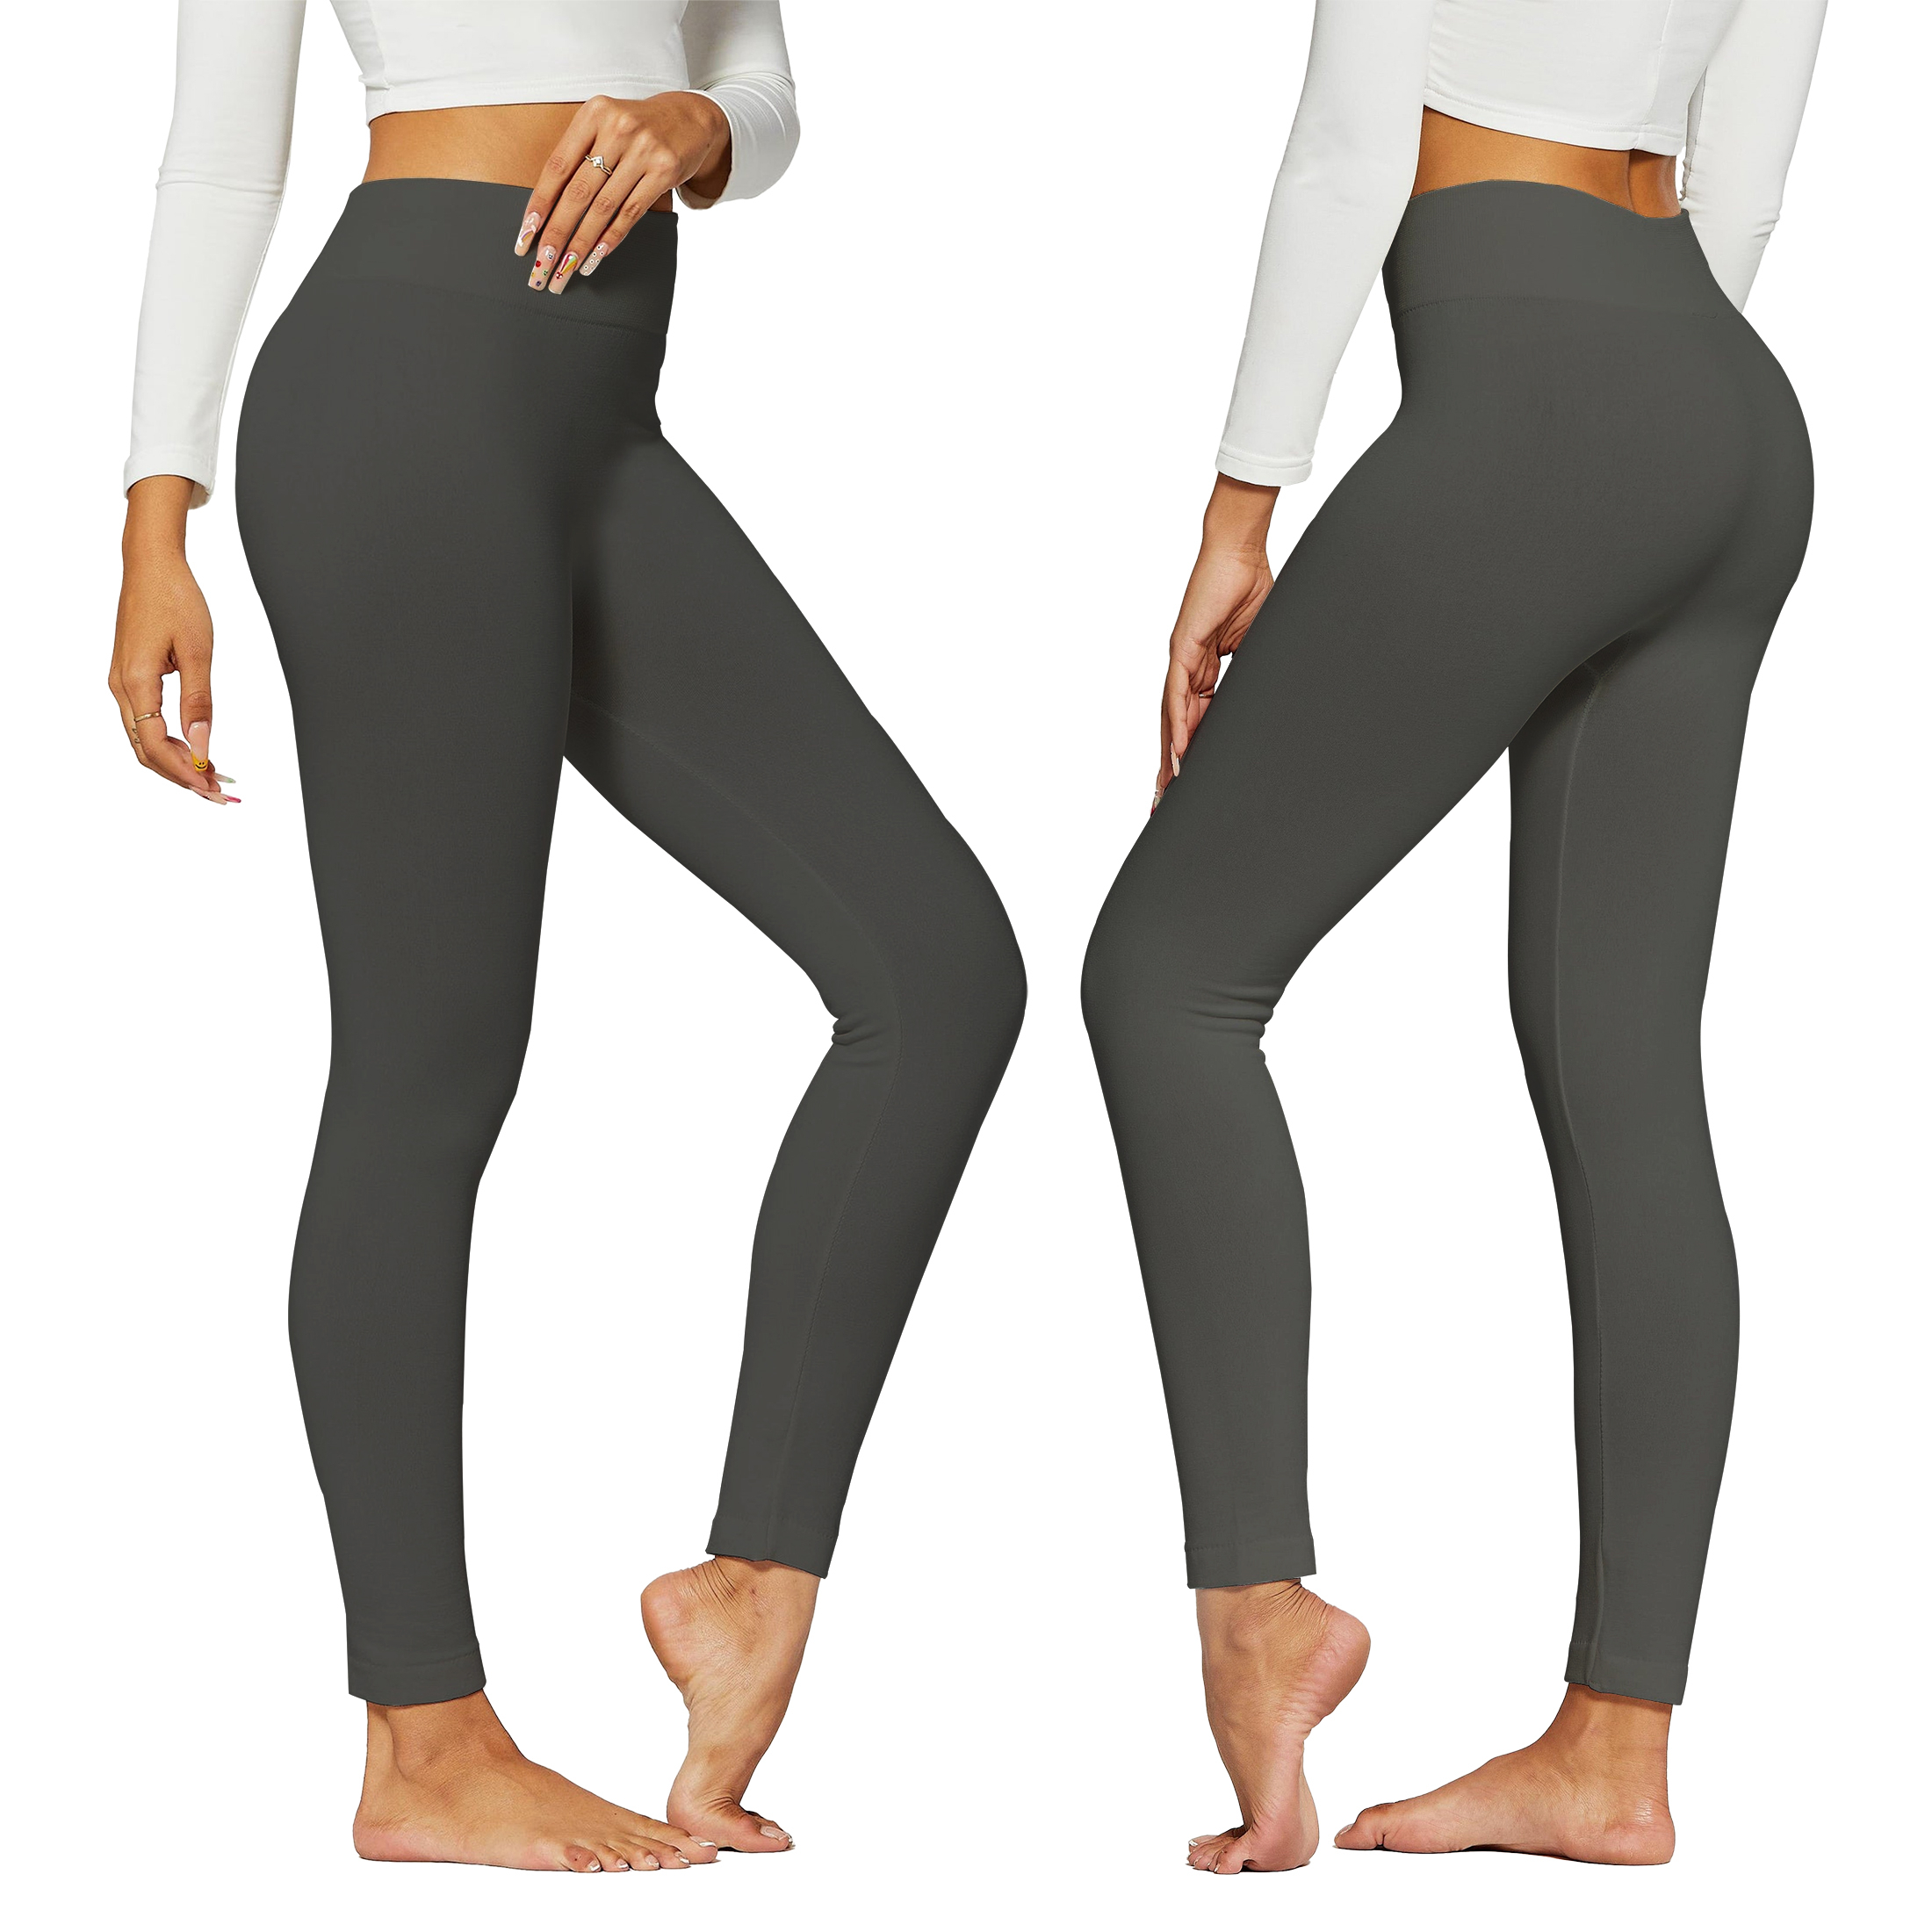 Women's Premium Quality High-Waist Fleece Lined Leggings (S-4X) - Grey, 1X/2X